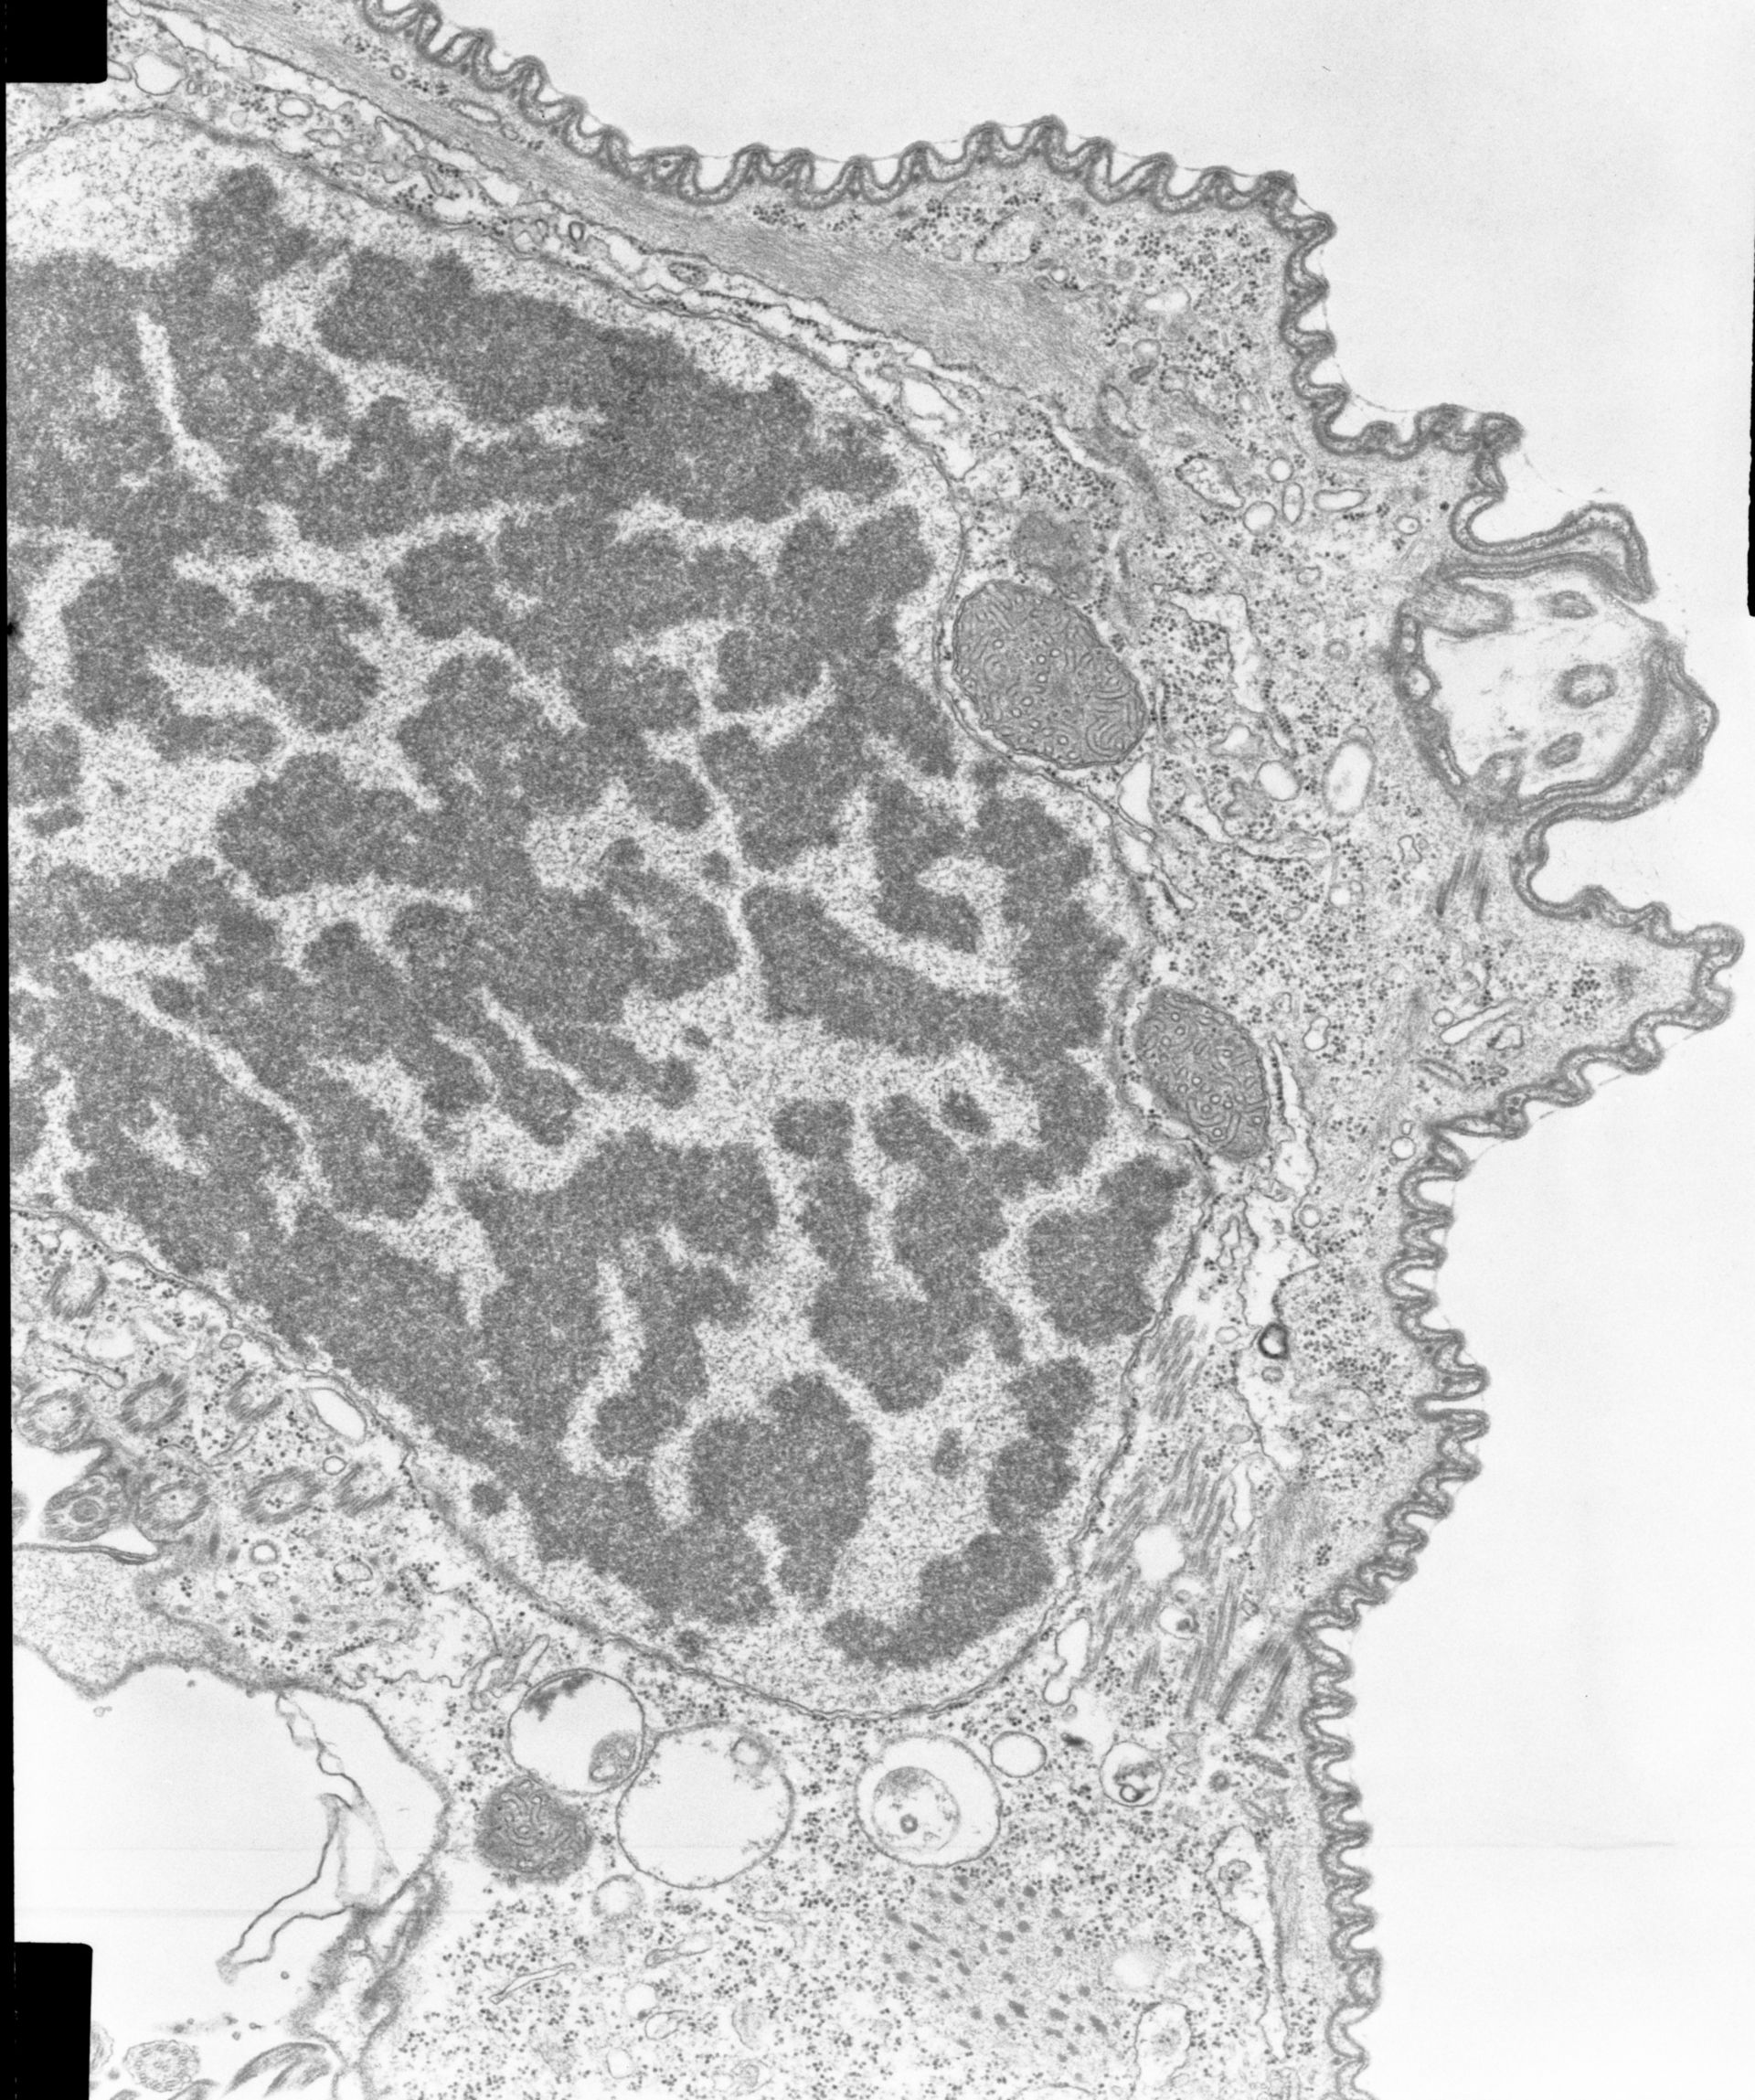 Opercularia coarctata (corpo basale microtubuli) - CIL:7333